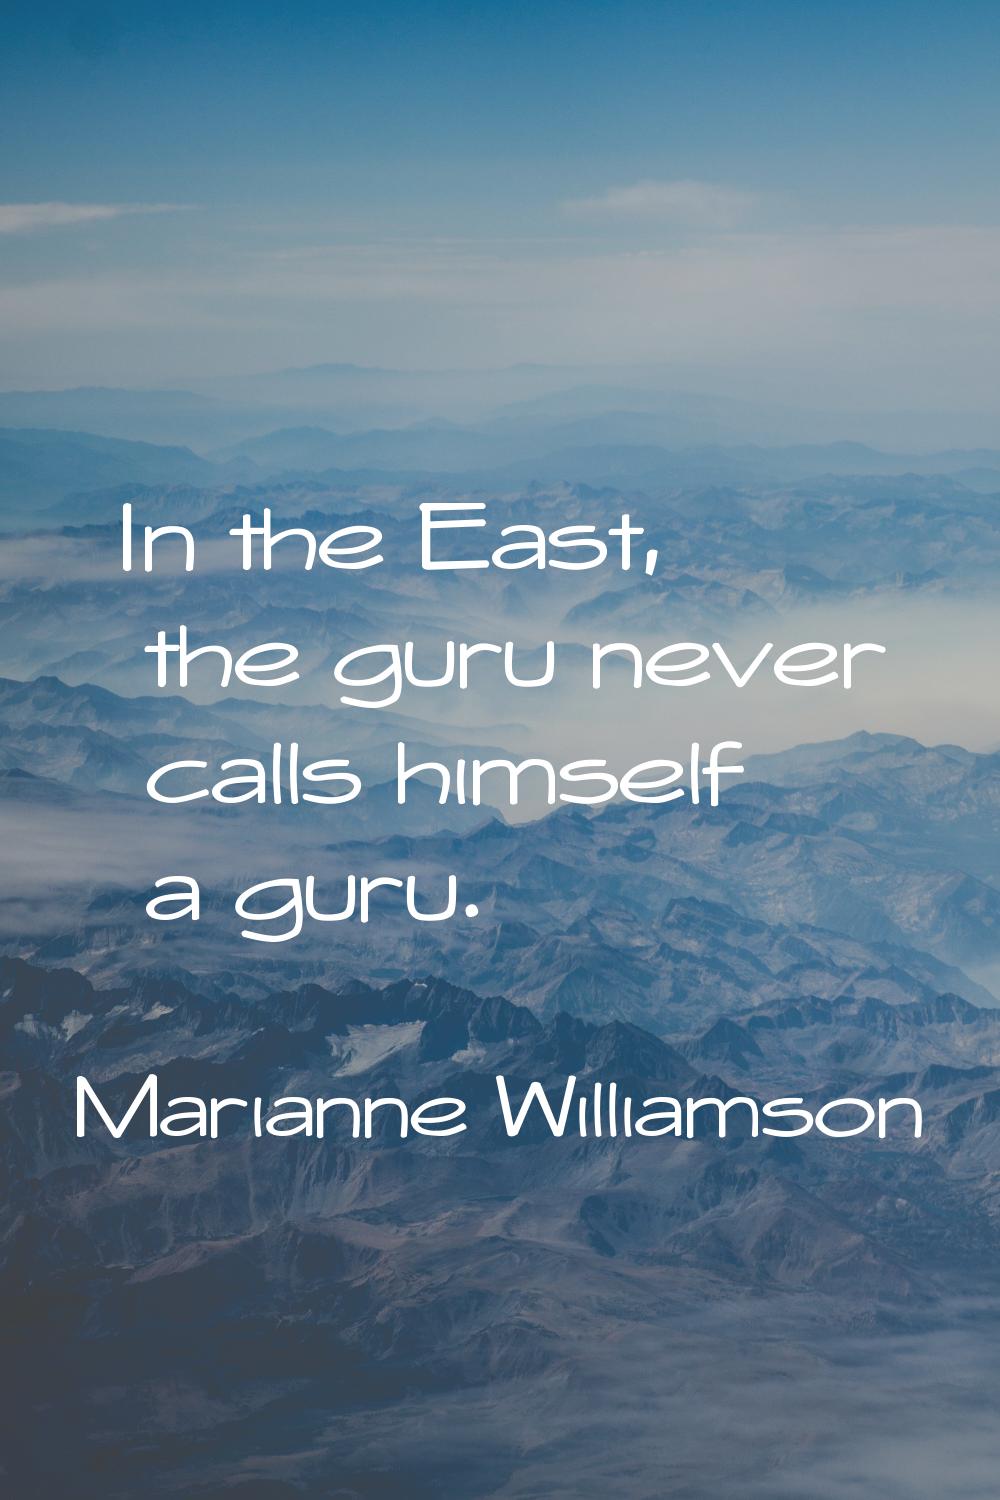 In the East, the guru never calls himself a guru.